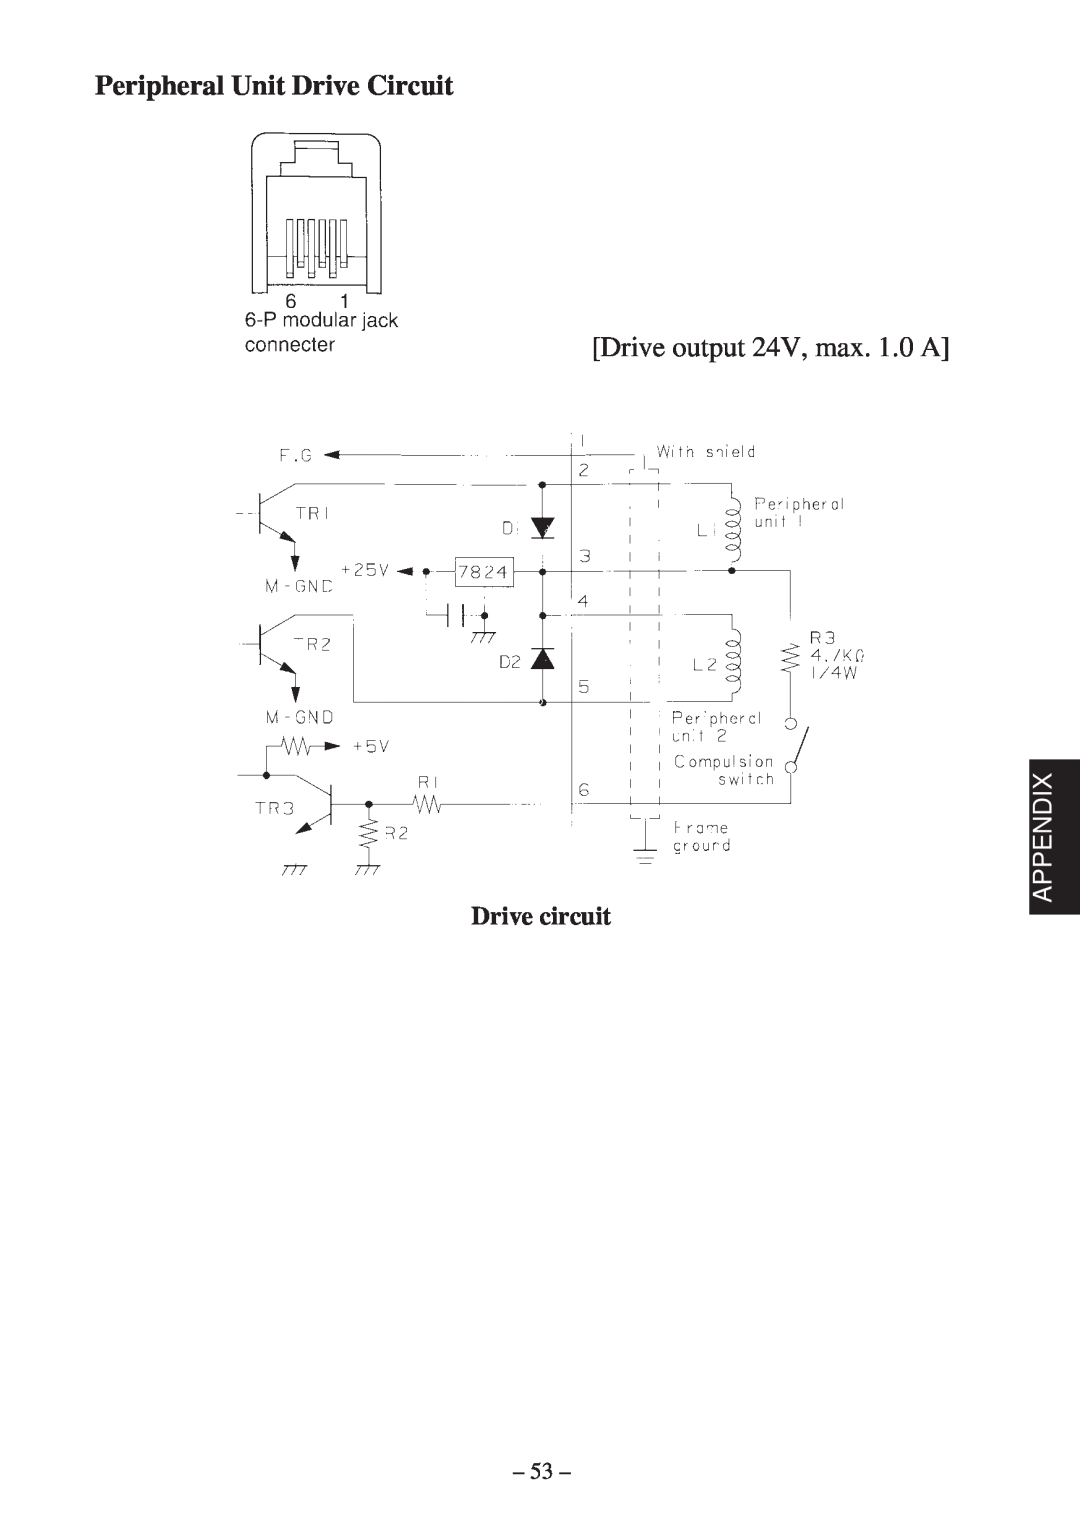 Star Micronics SP342F-A, SP312F manual Peripheral Unit Drive Circuit, Drive output 24V, max. 1.0 A, Appendix, Drive circuit 